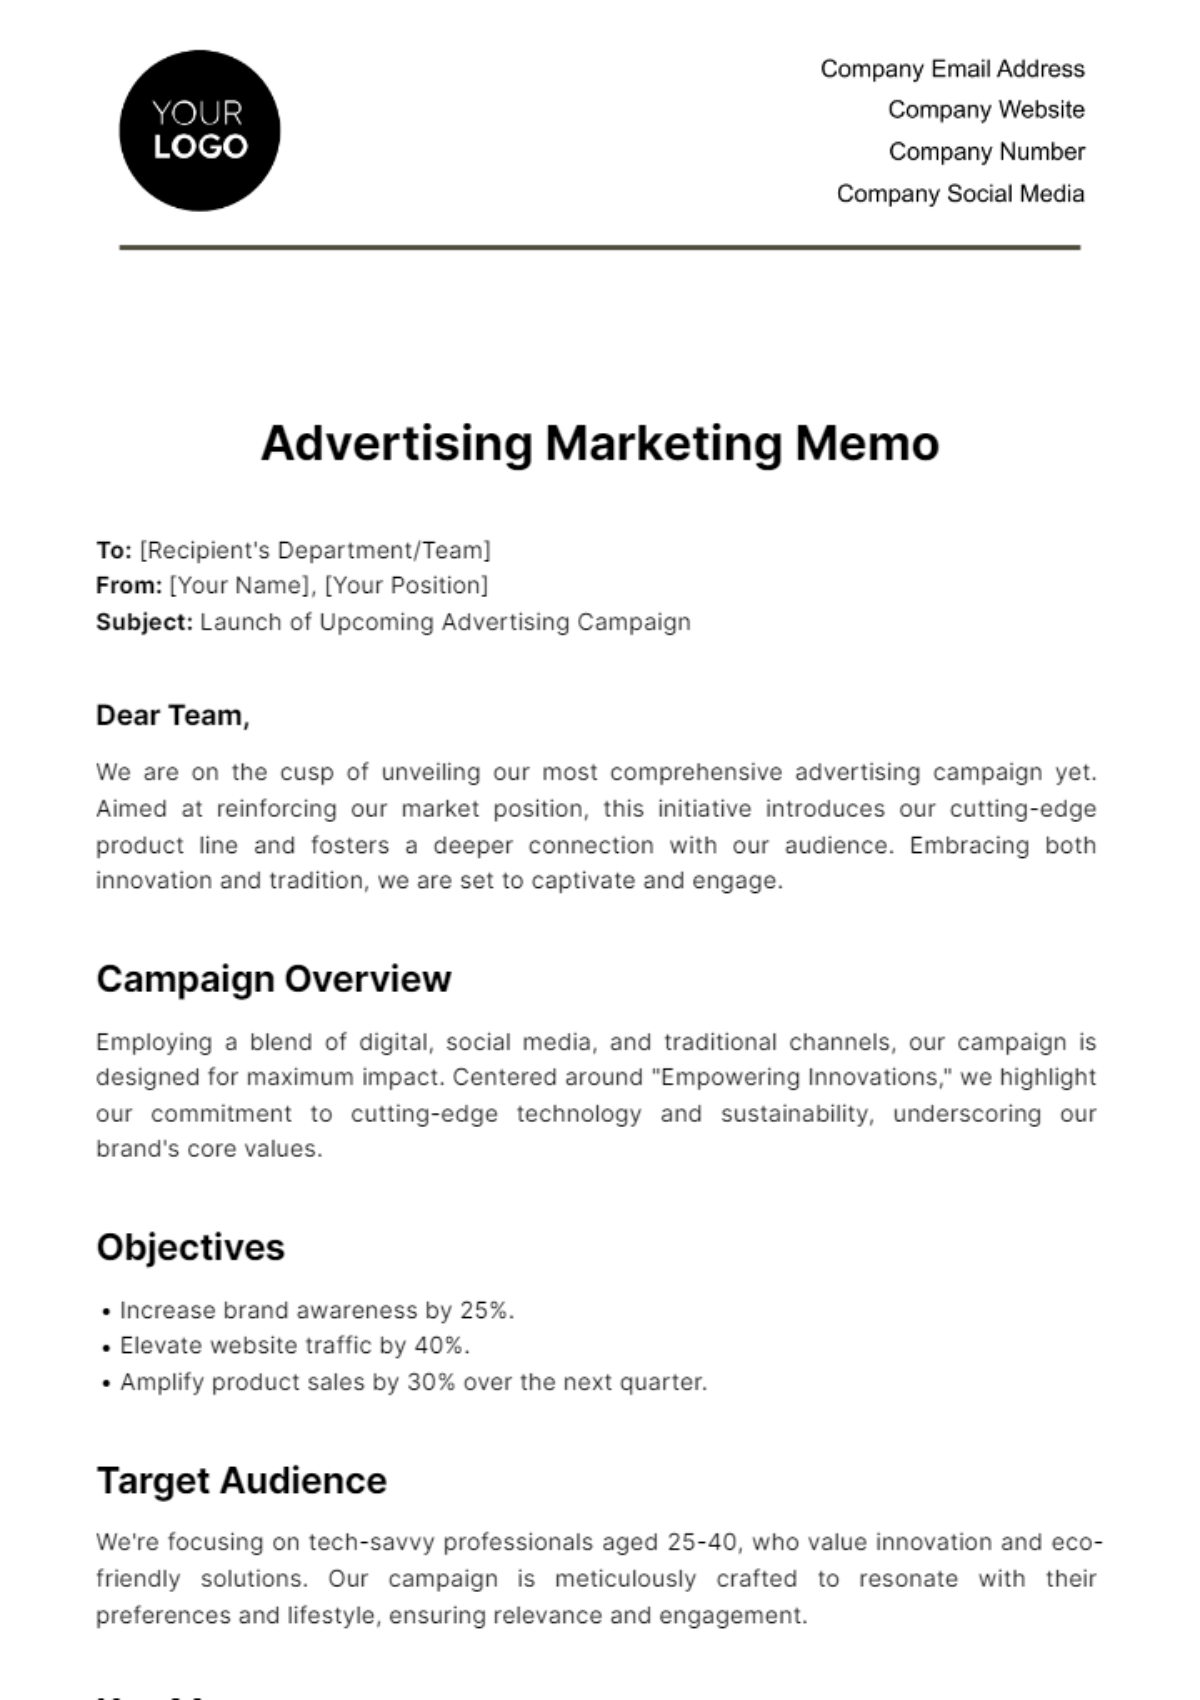 Advertising Marketing Memo Template